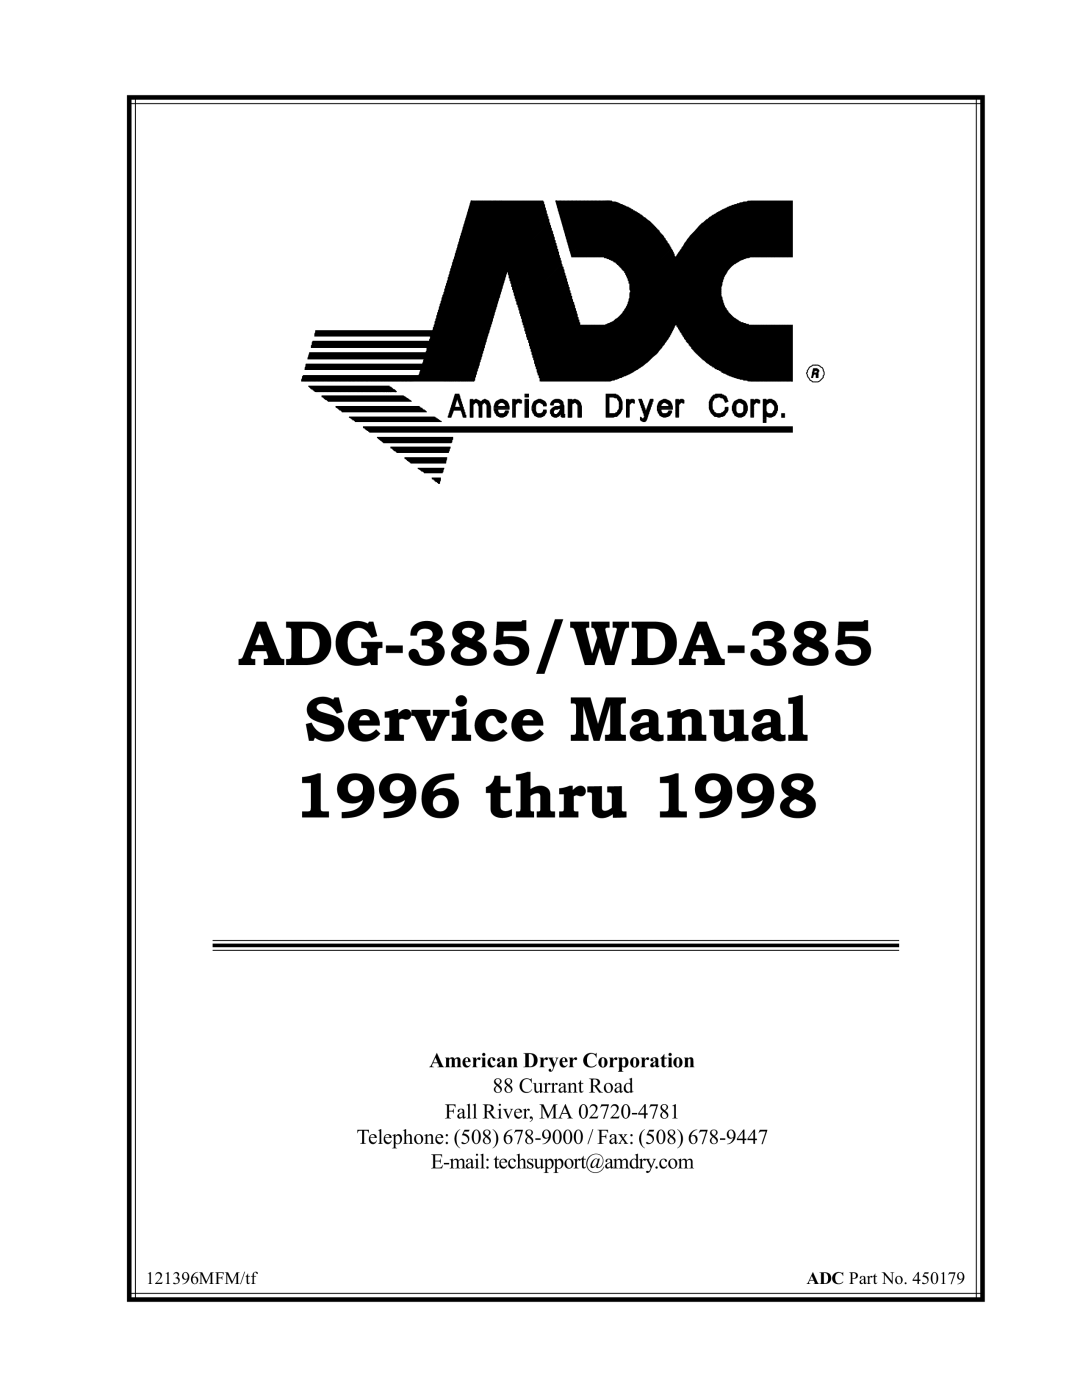 American Dryer Corp service manual ADG-385/WDA-385, Service Manual, thru, 121396MFM/tf, ADC Part No 